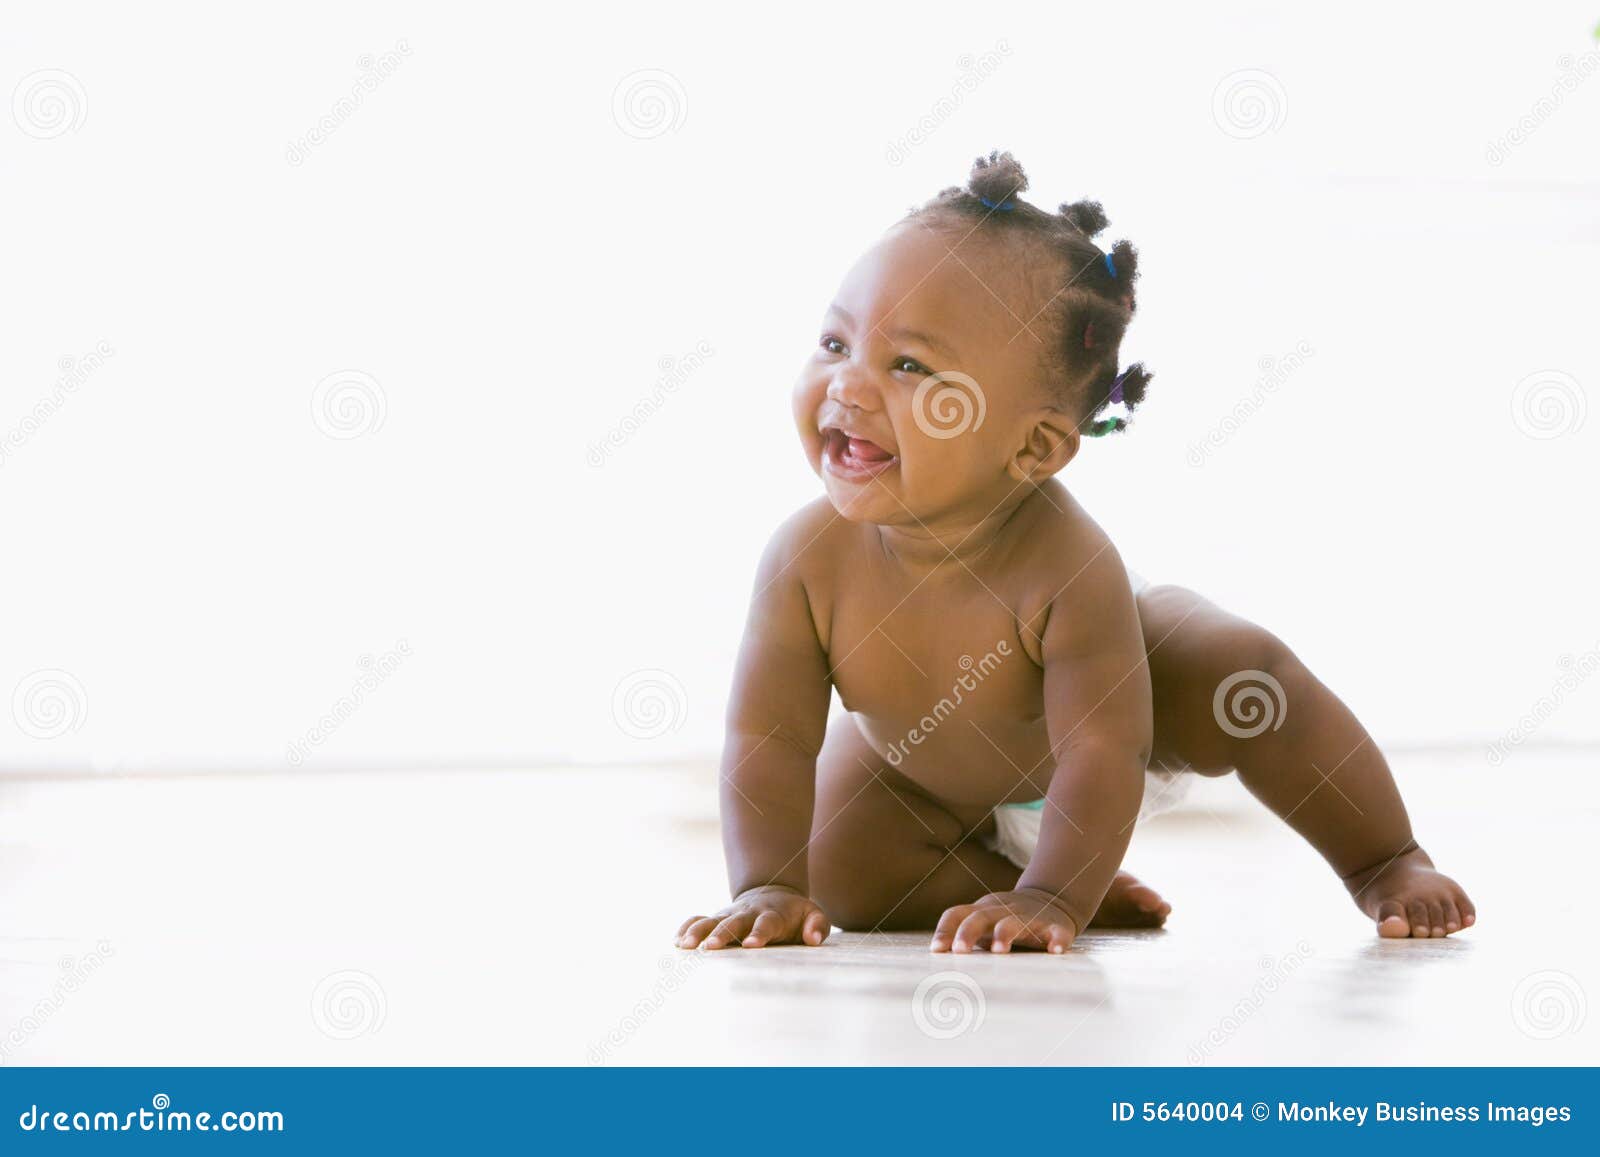 baby crawling indoors smiling